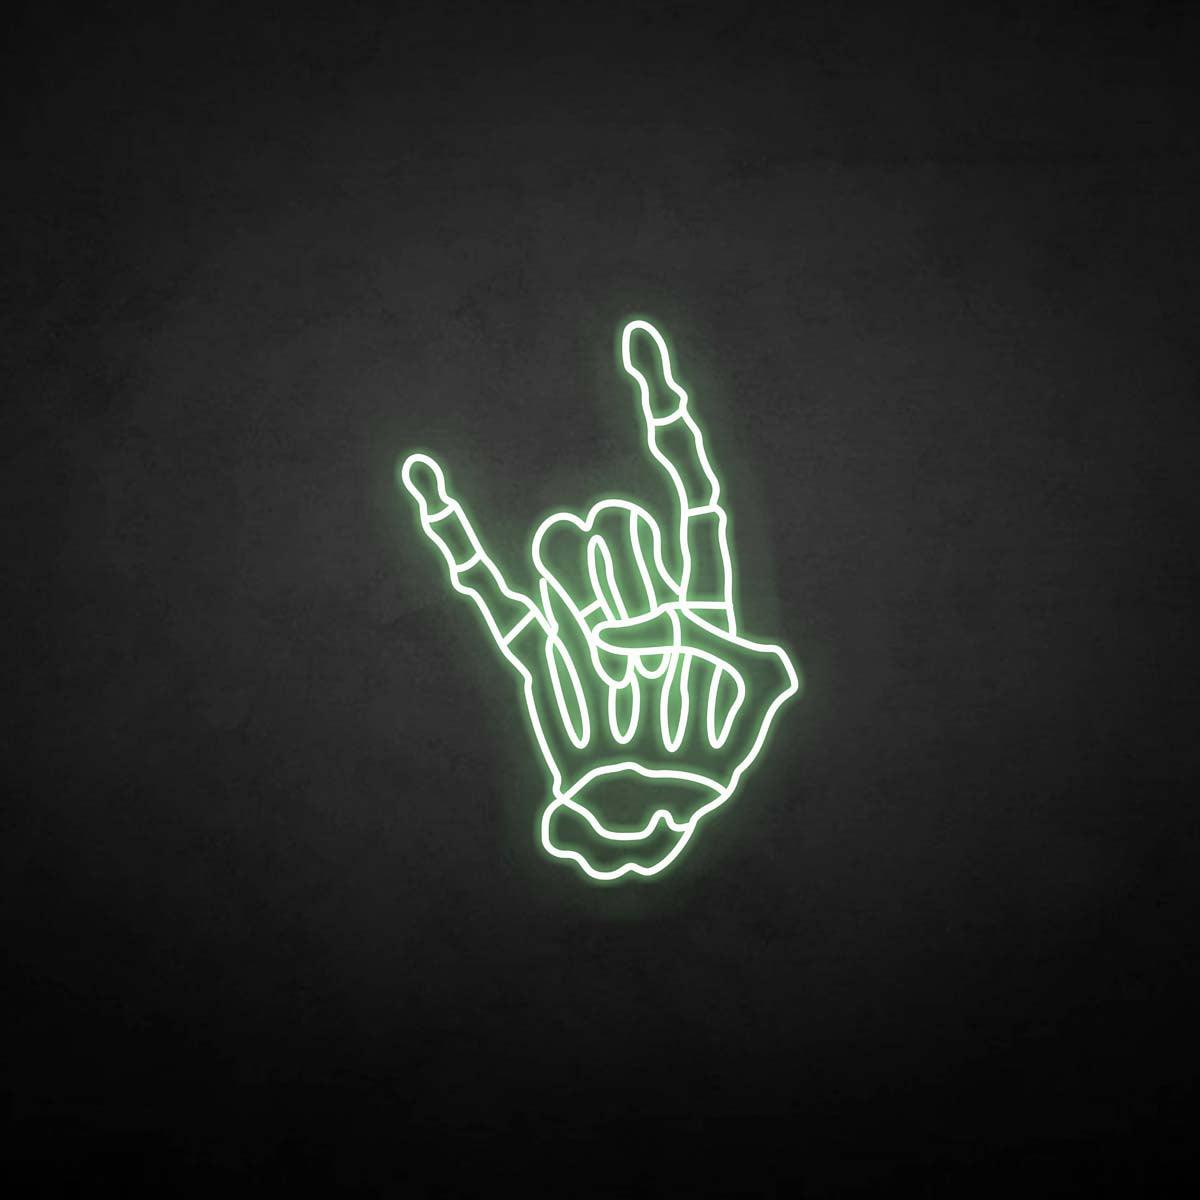 'Skeleton hand' neon sign